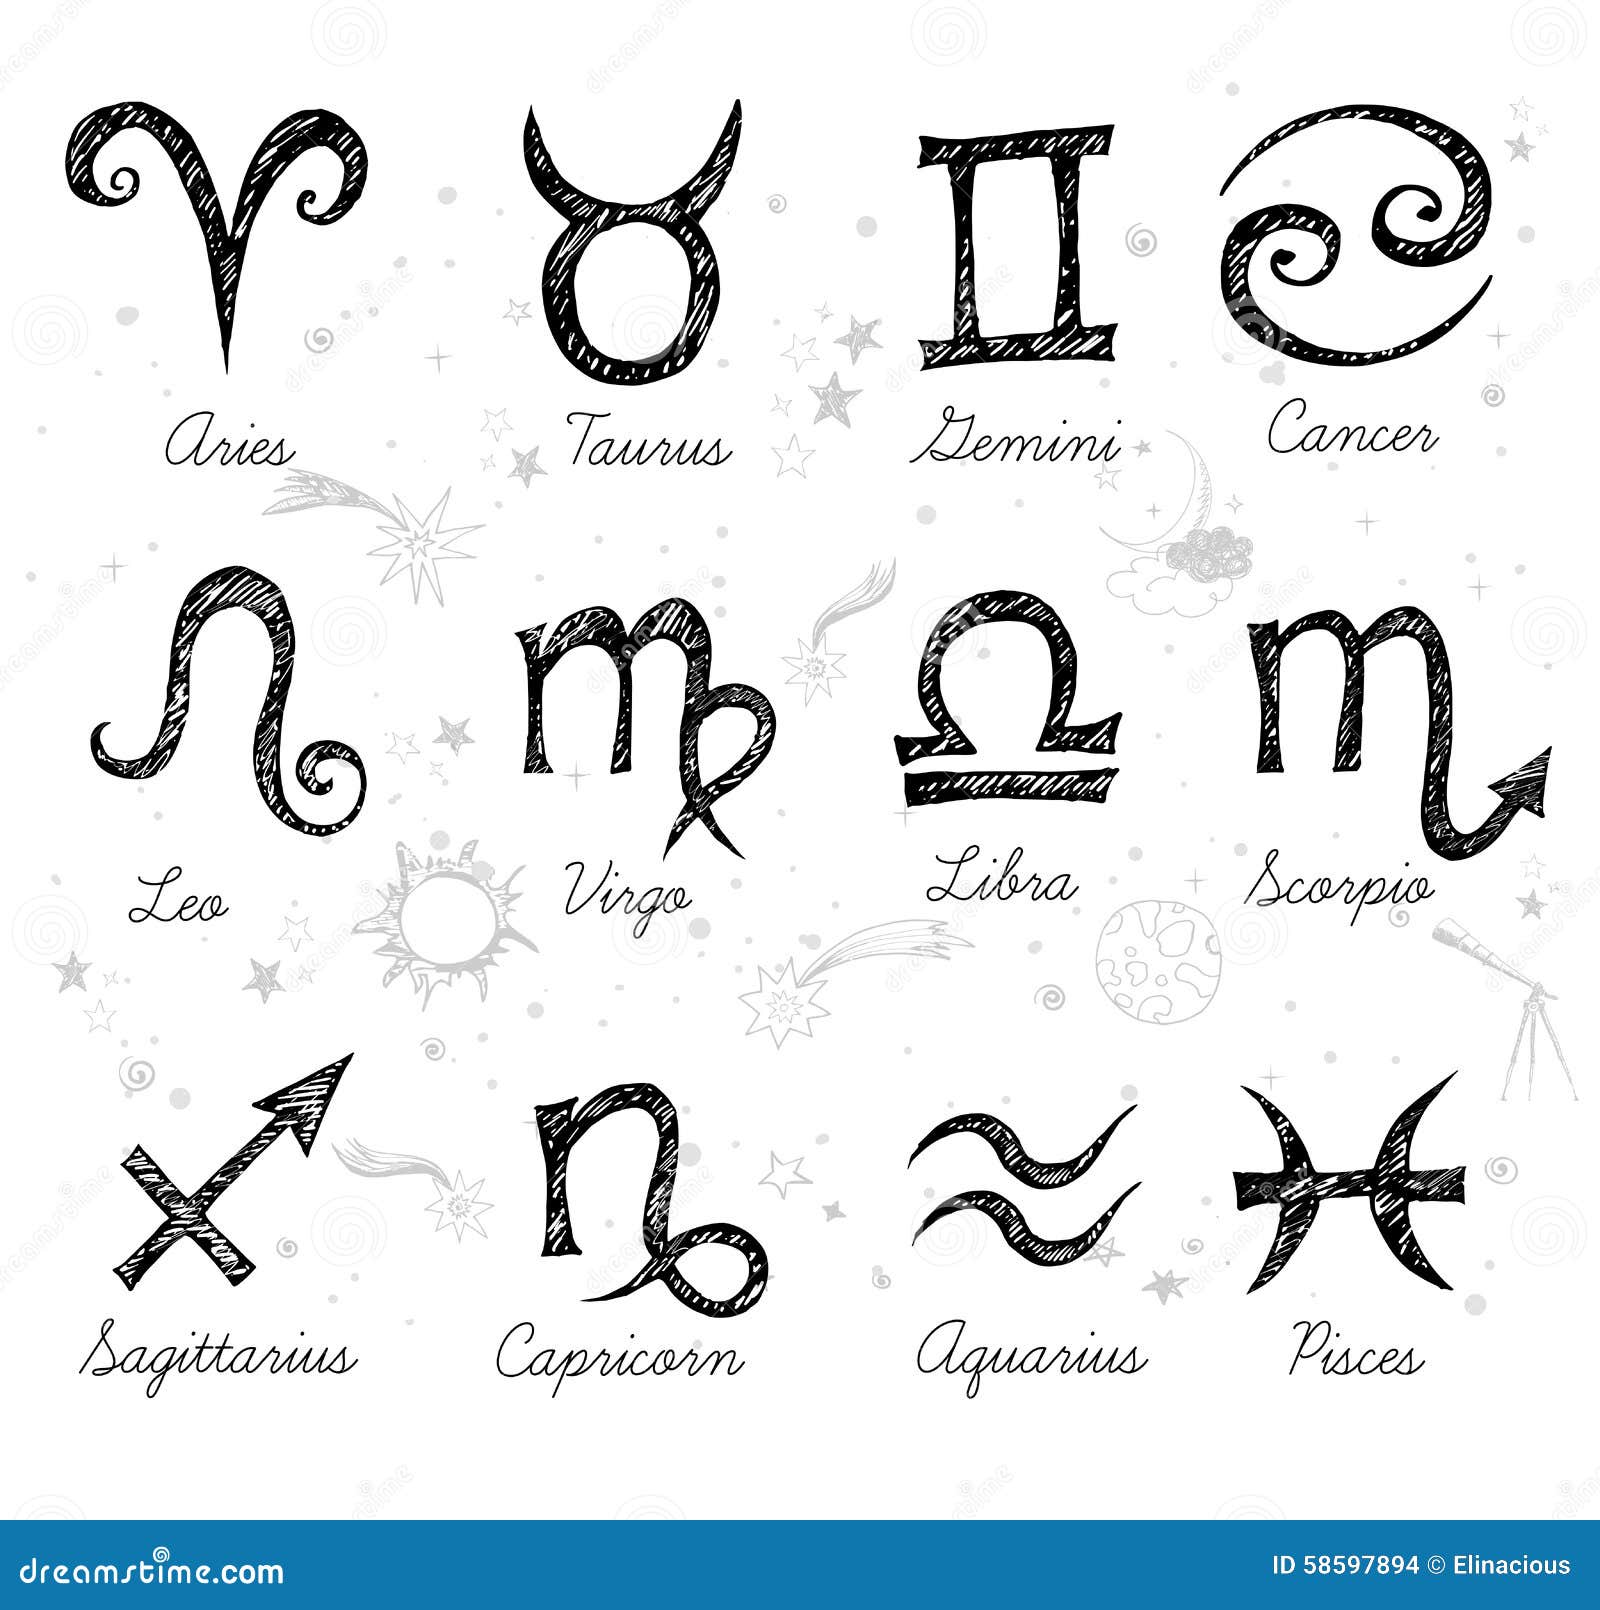 Sketchy zodiac symbols stock illustration. Illustration of isolated ...